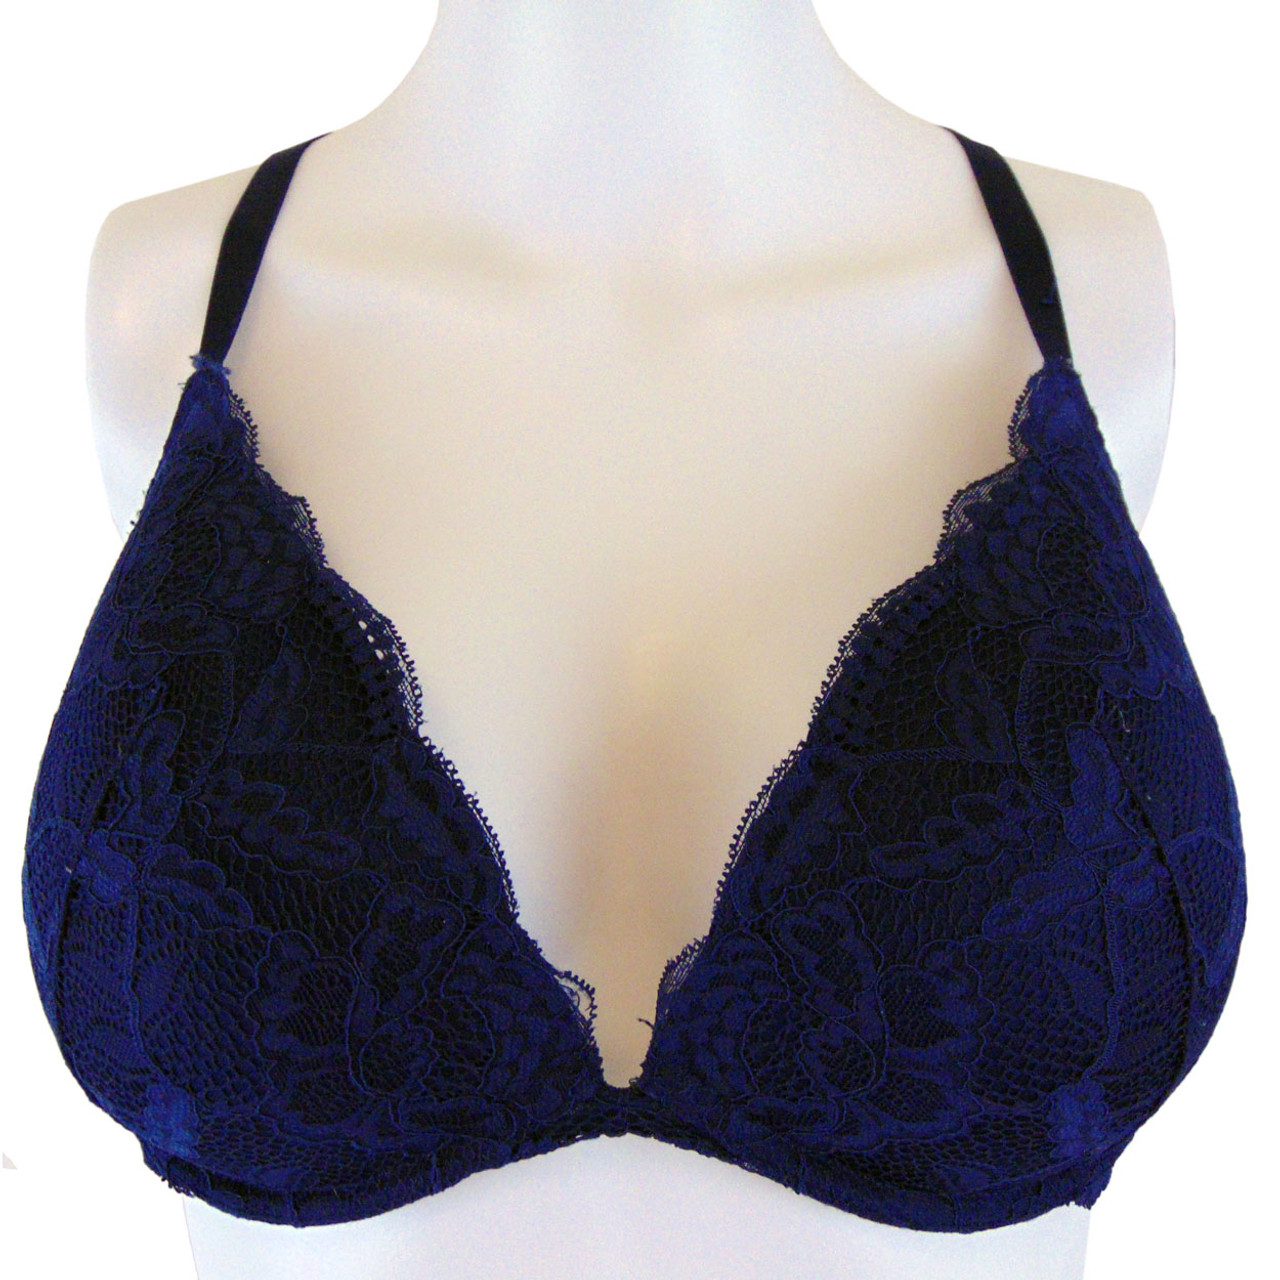 Dark blue lace push-up bra